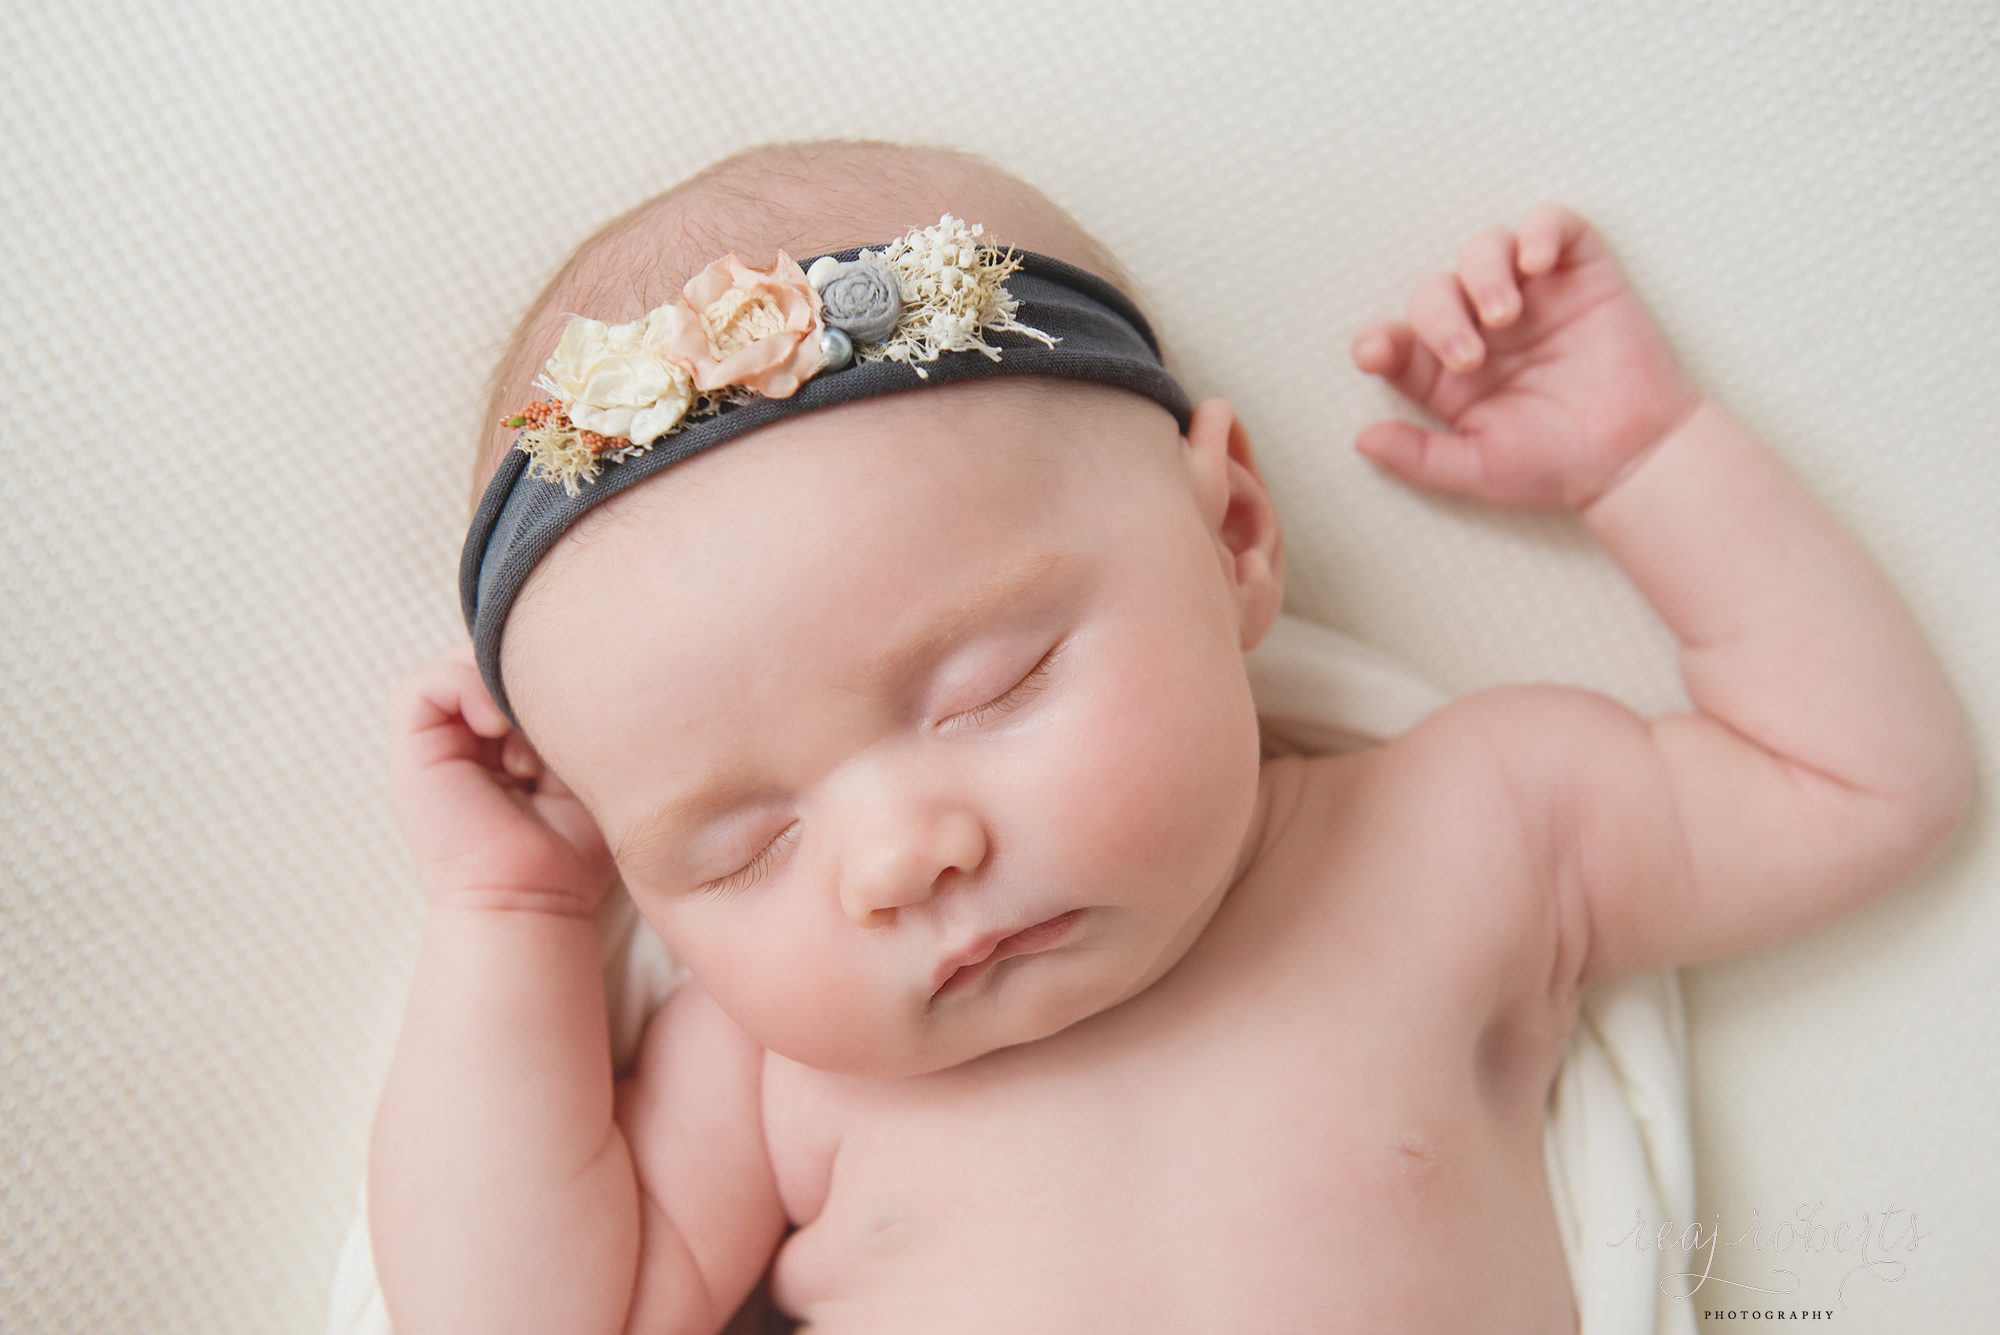 Newborn girl sleeping | Reaj Roberts Photography